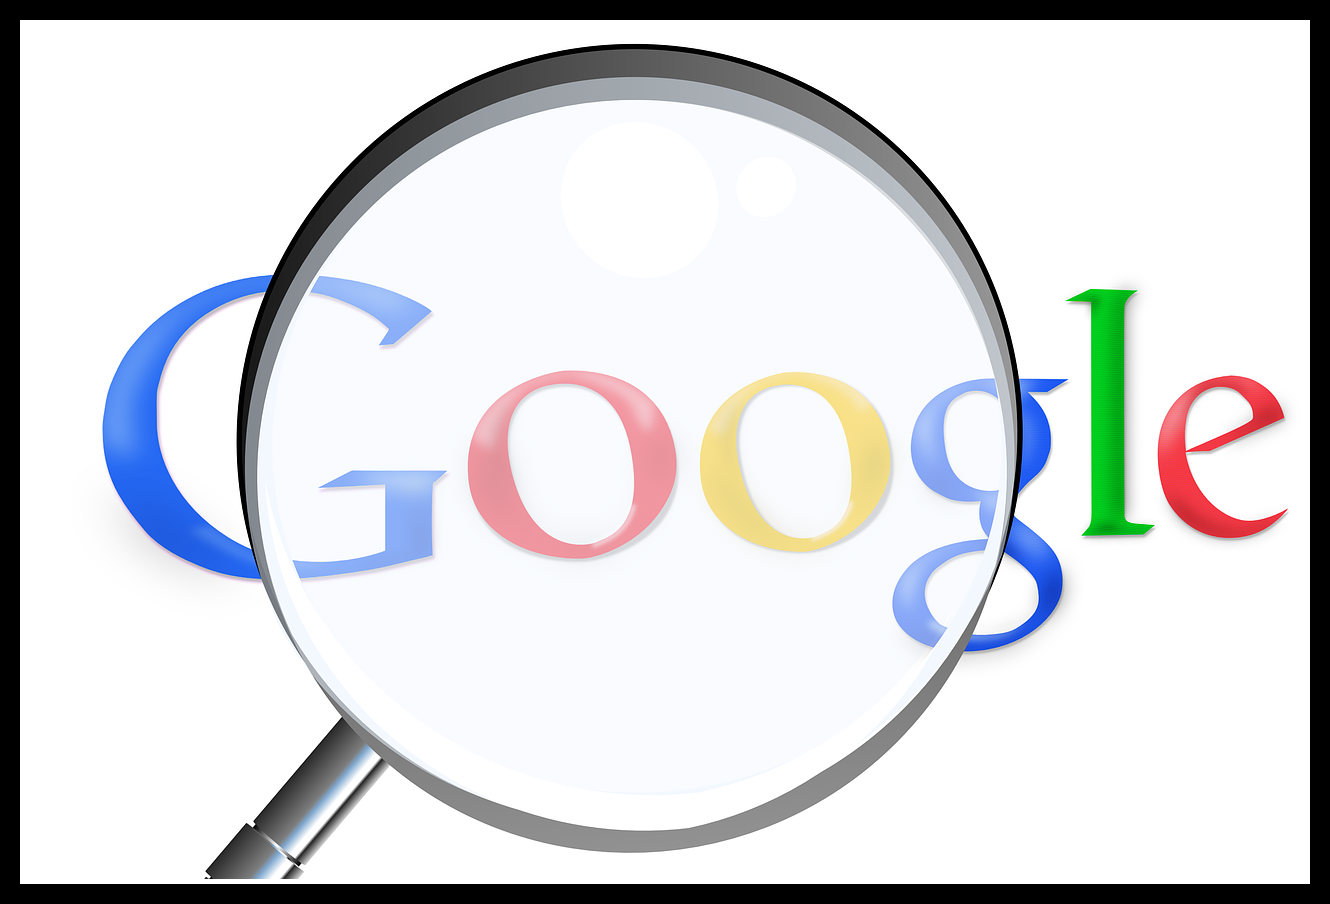 GoogleSearch